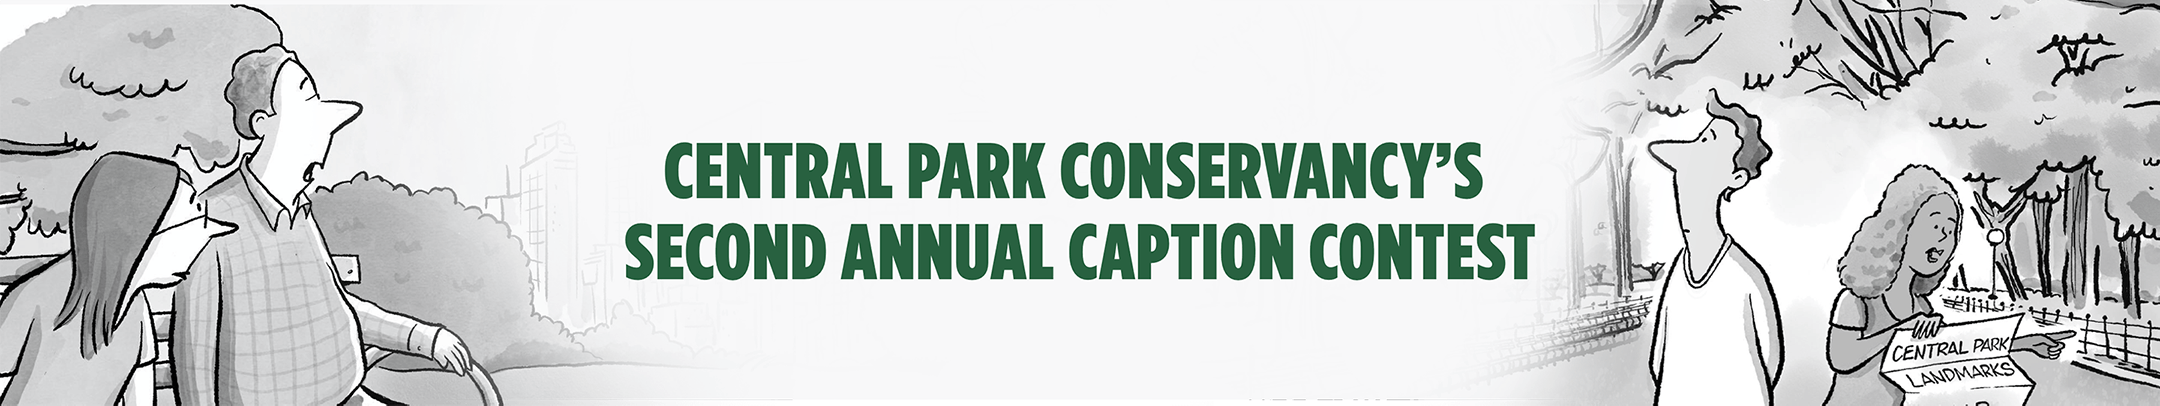 Central Park Conservancy's Second Annual Caption Contest.